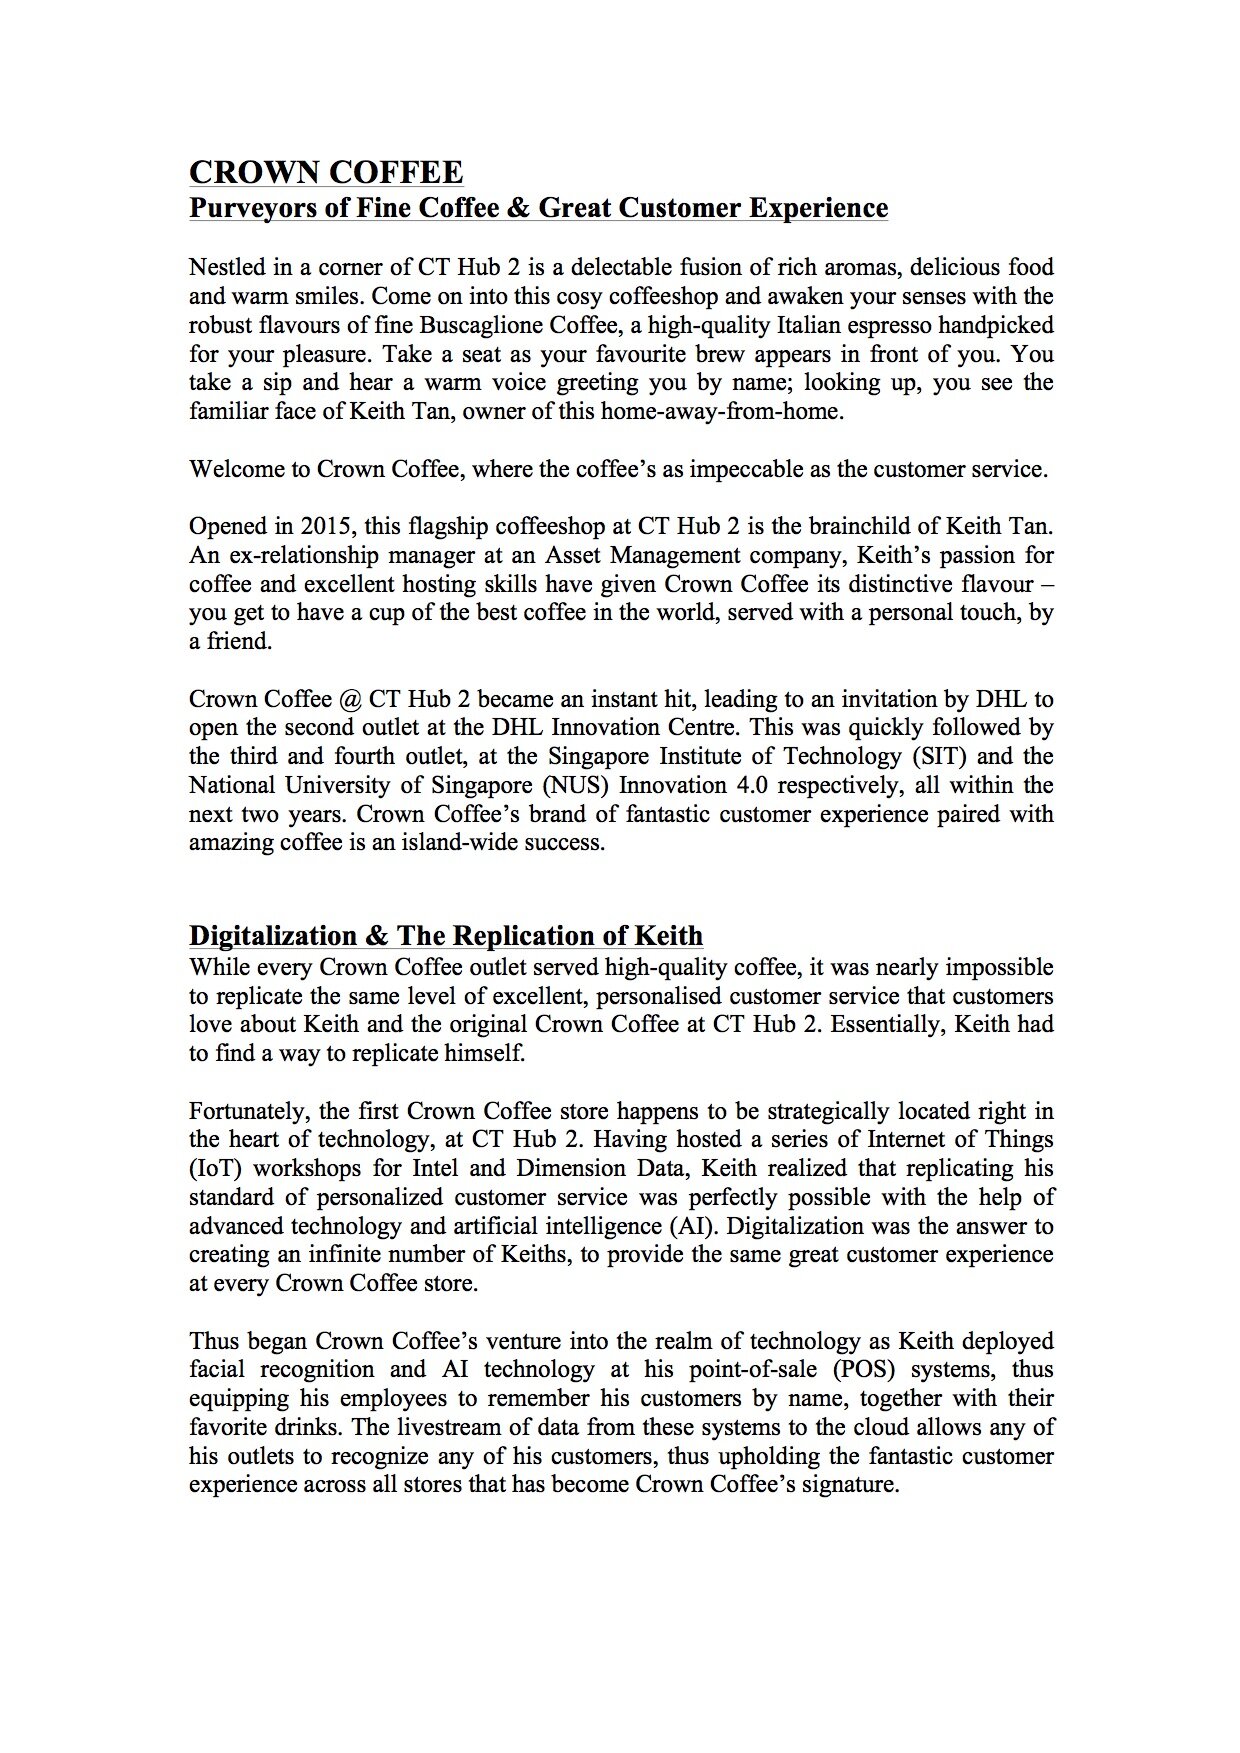 Press Kit (Business Story) - Crown Coffee .jpg